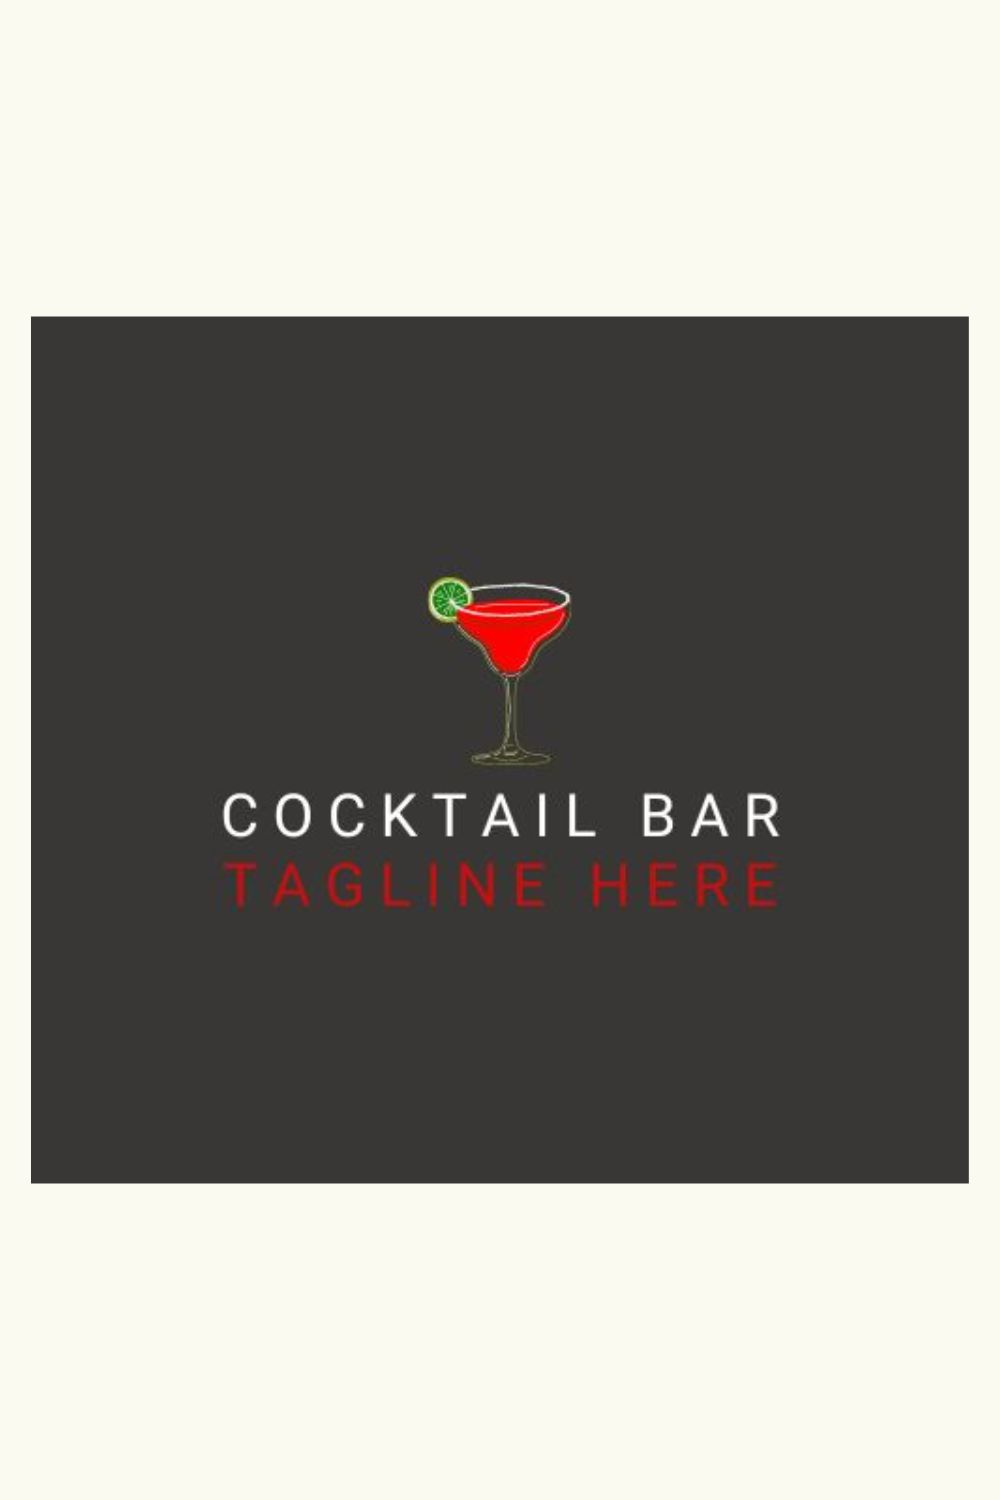 Editable Cocktail Bar Logo Template pinterest preview image.